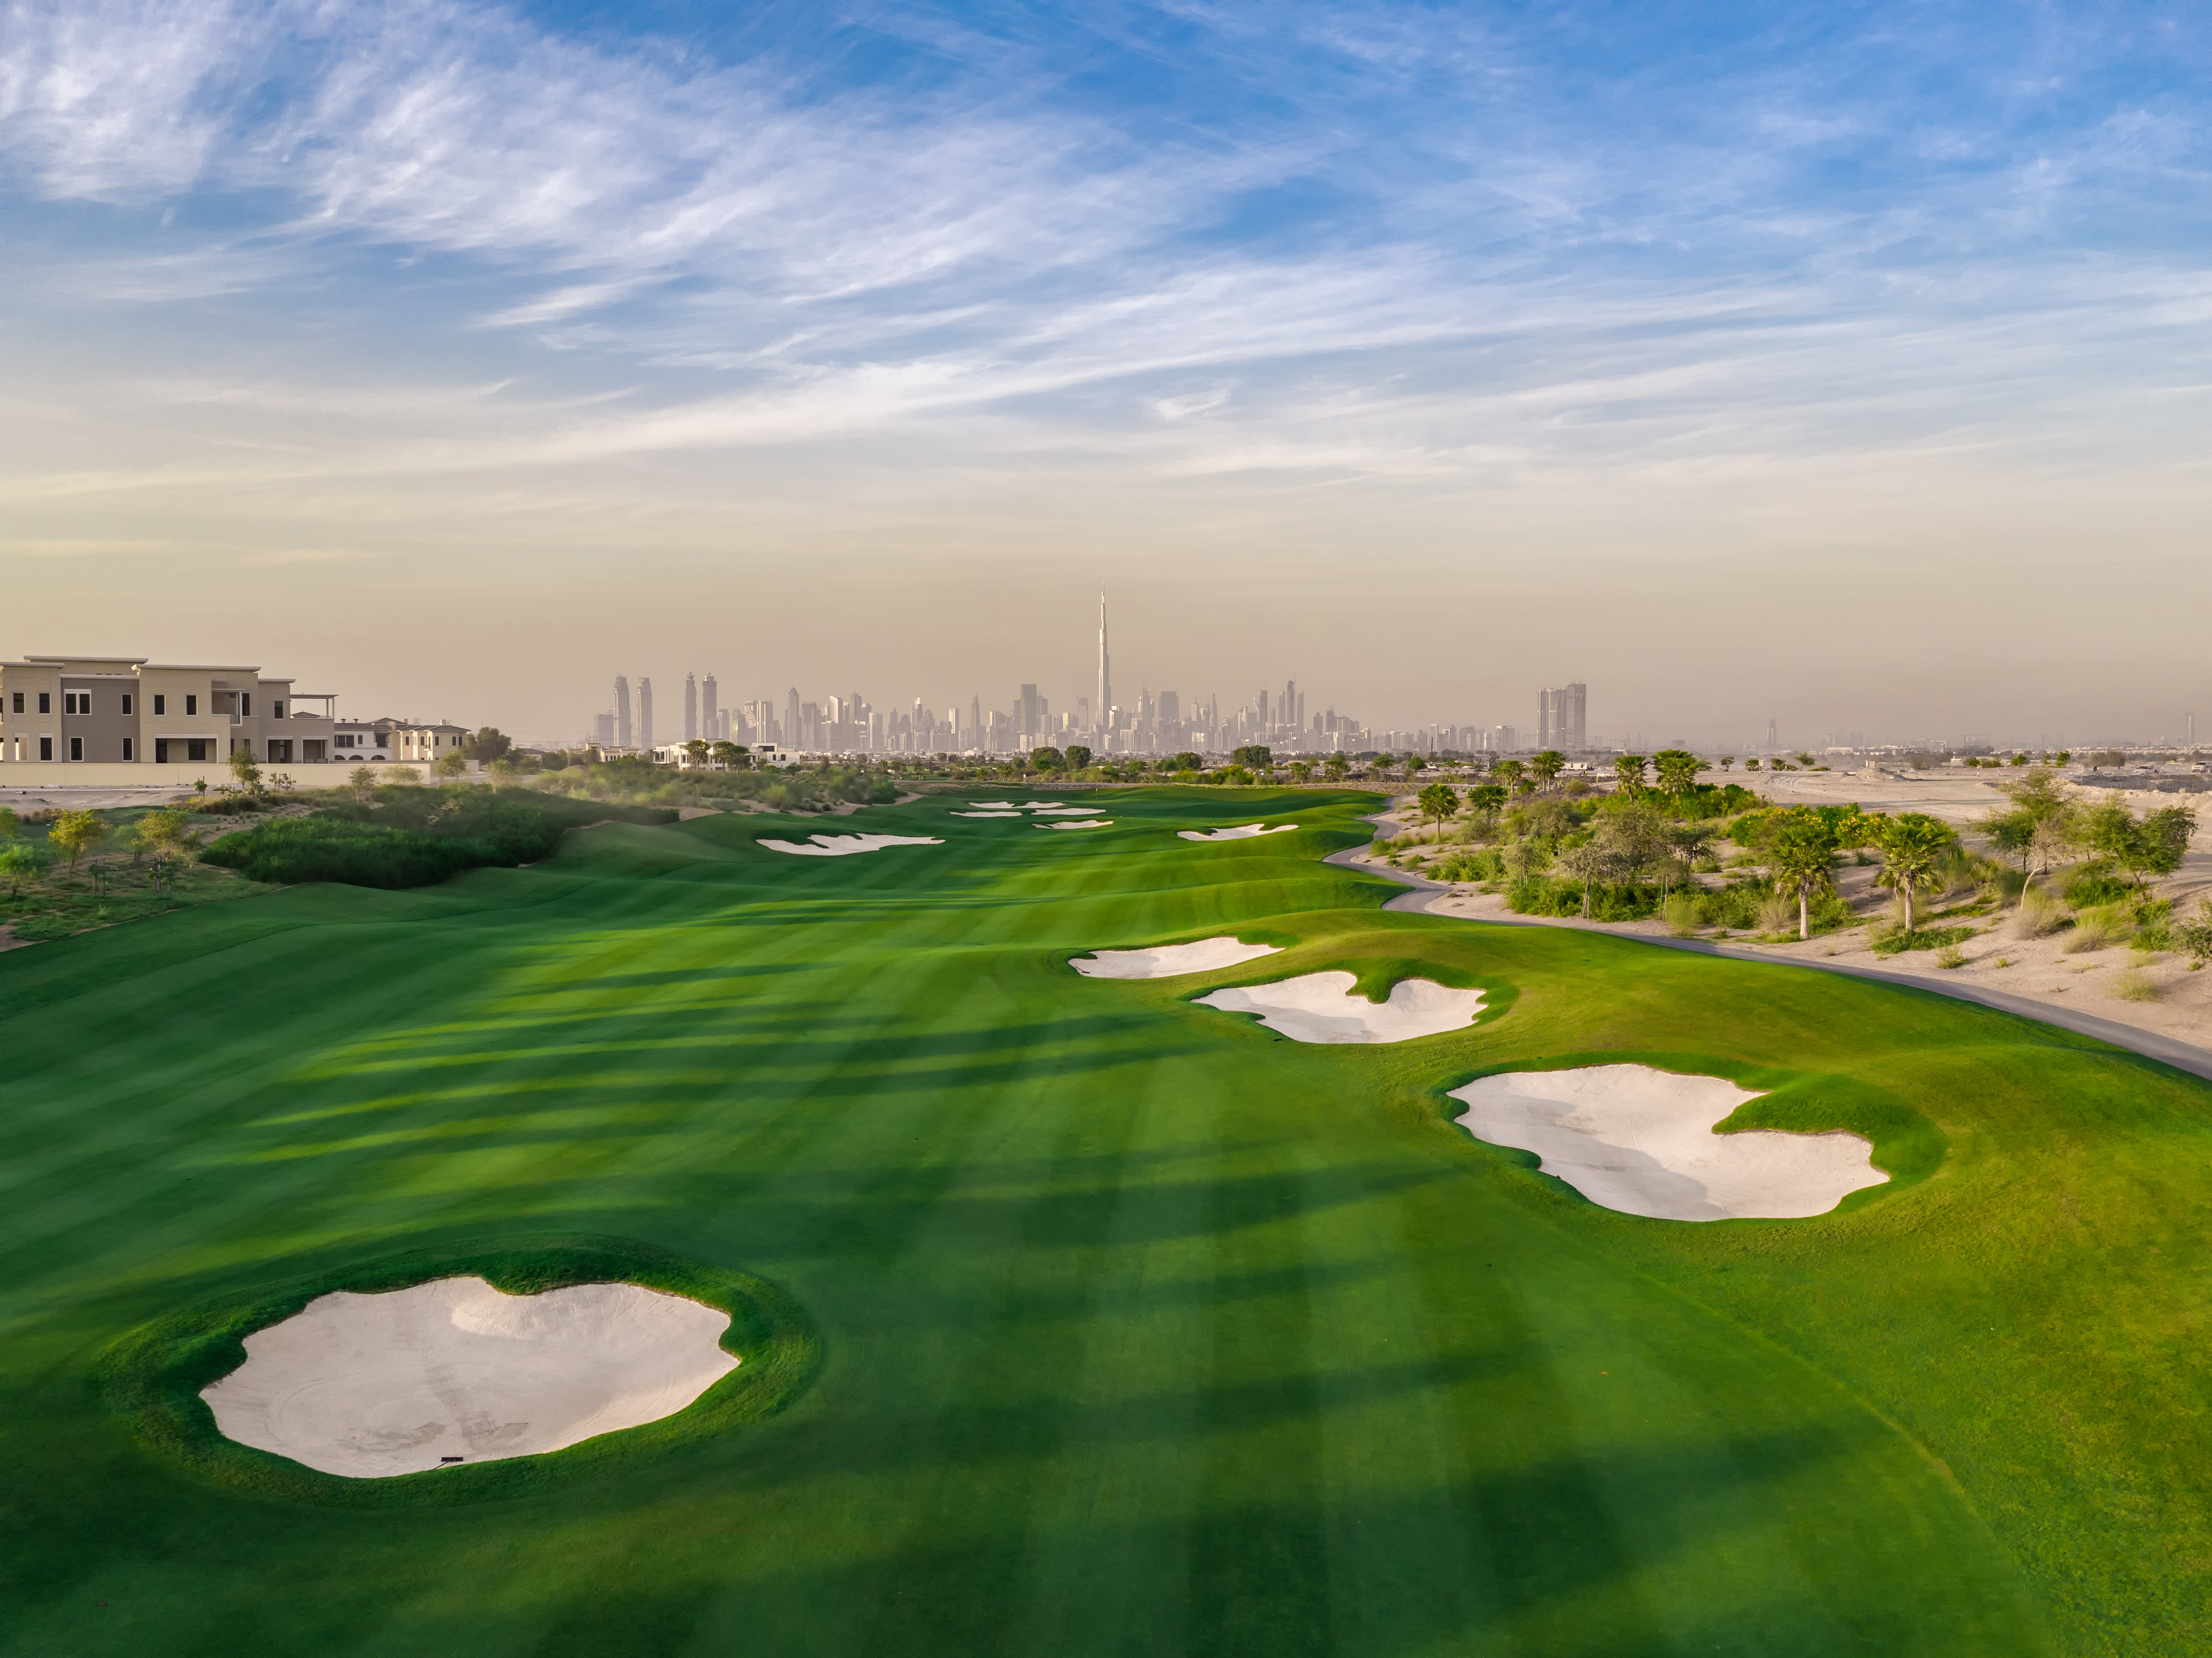 Dubai Hills Golf Club A Sneak Peek Inside Dubai’s Newest Golf Course